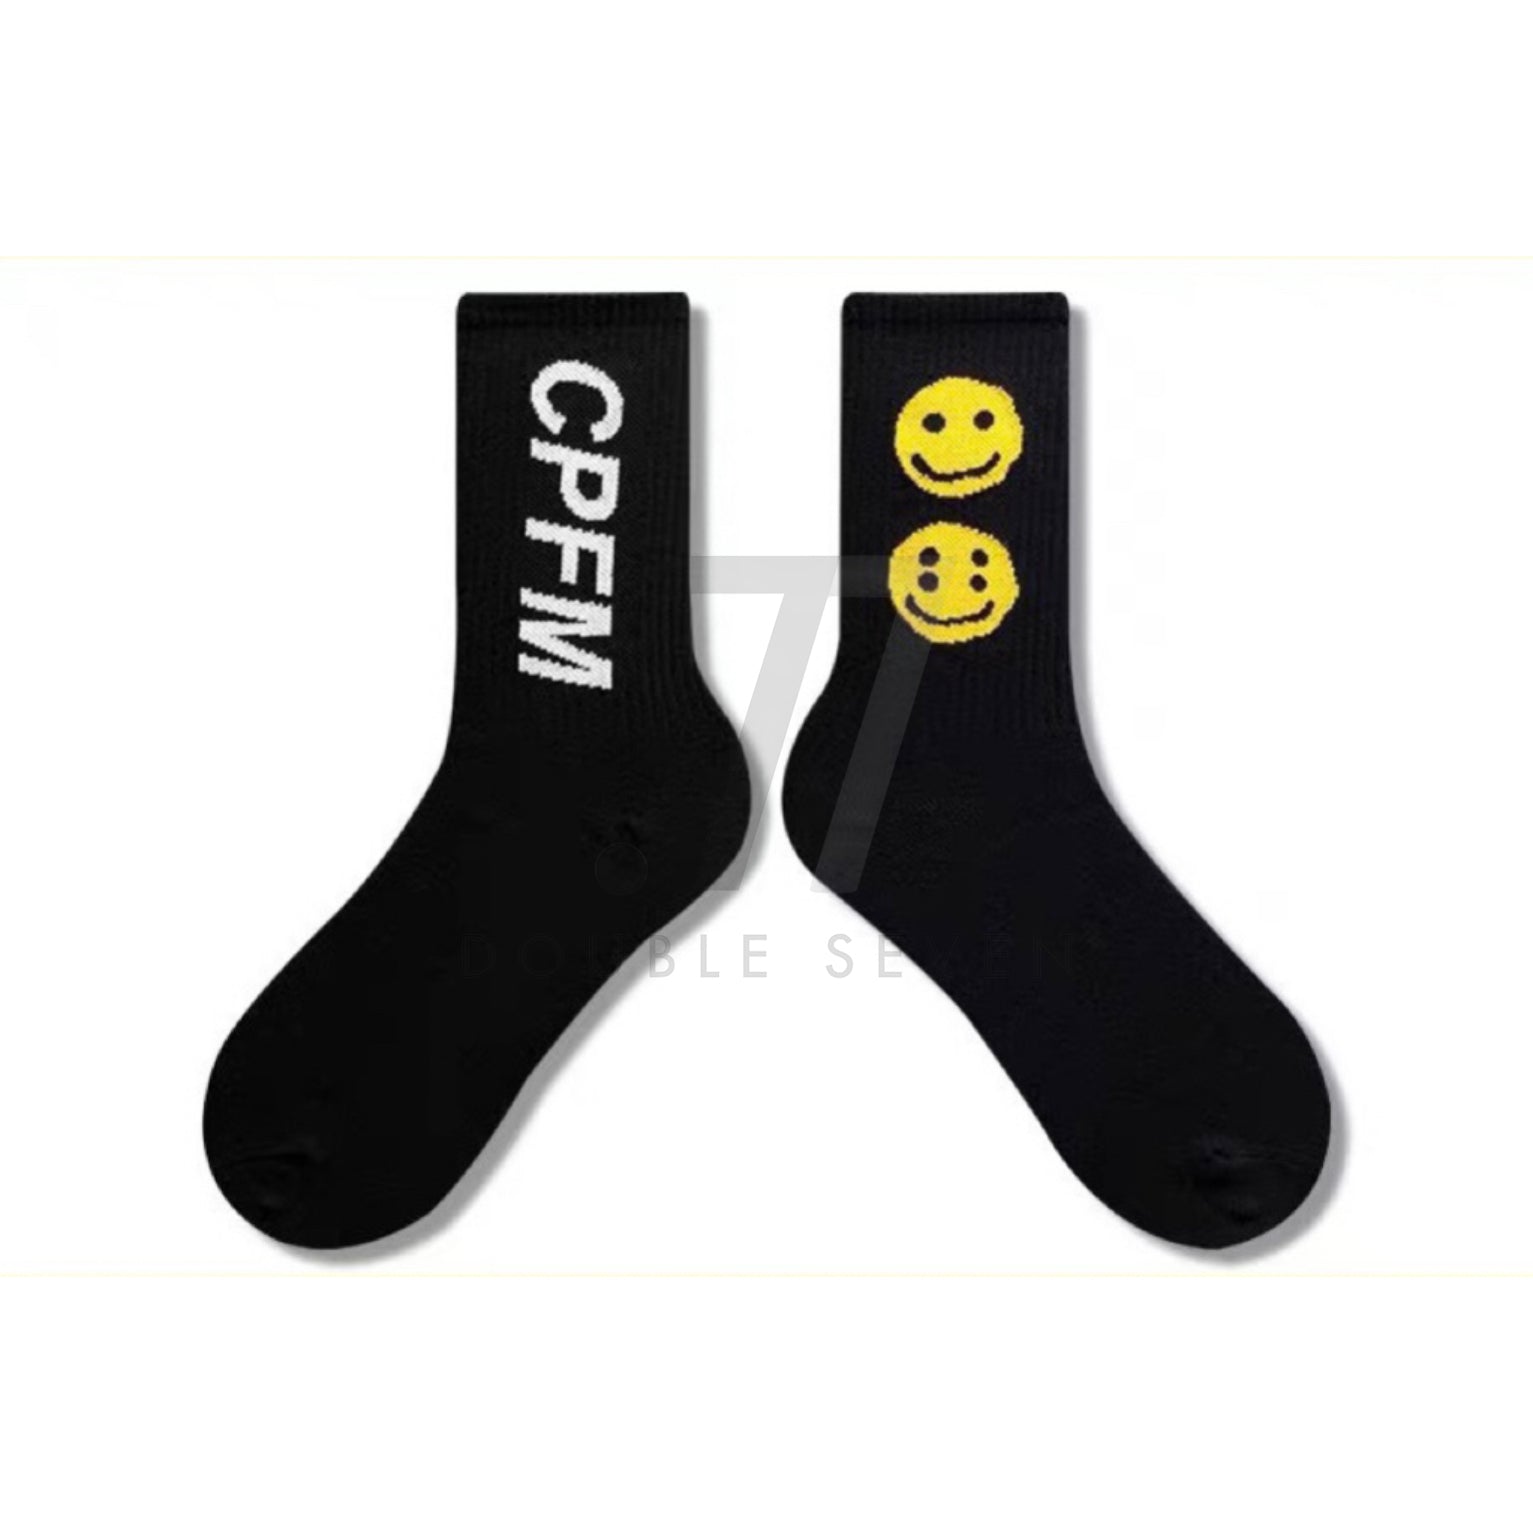 CPFM Smiley Face Unisex Long Socks